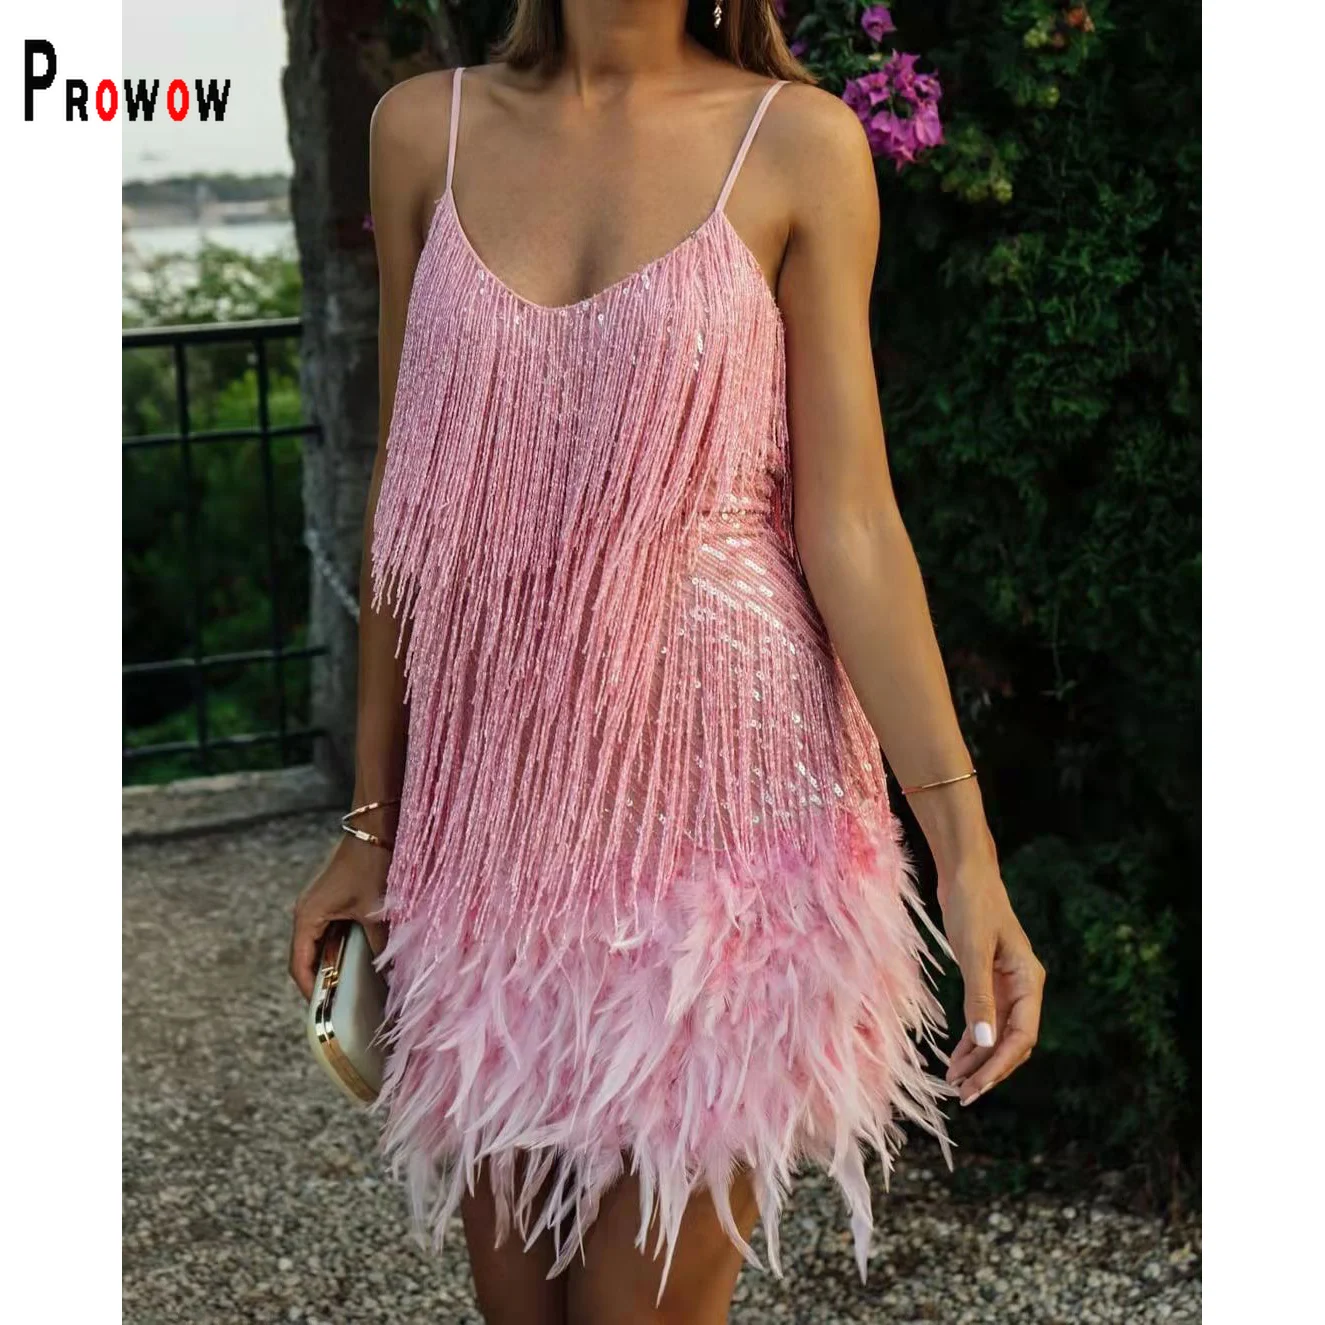 

Prowow Sexy Women Mini Dress Feather Tassel Sequined Splicing Party Nightclub Wear 2022 New Fashion Summer Female Clothing